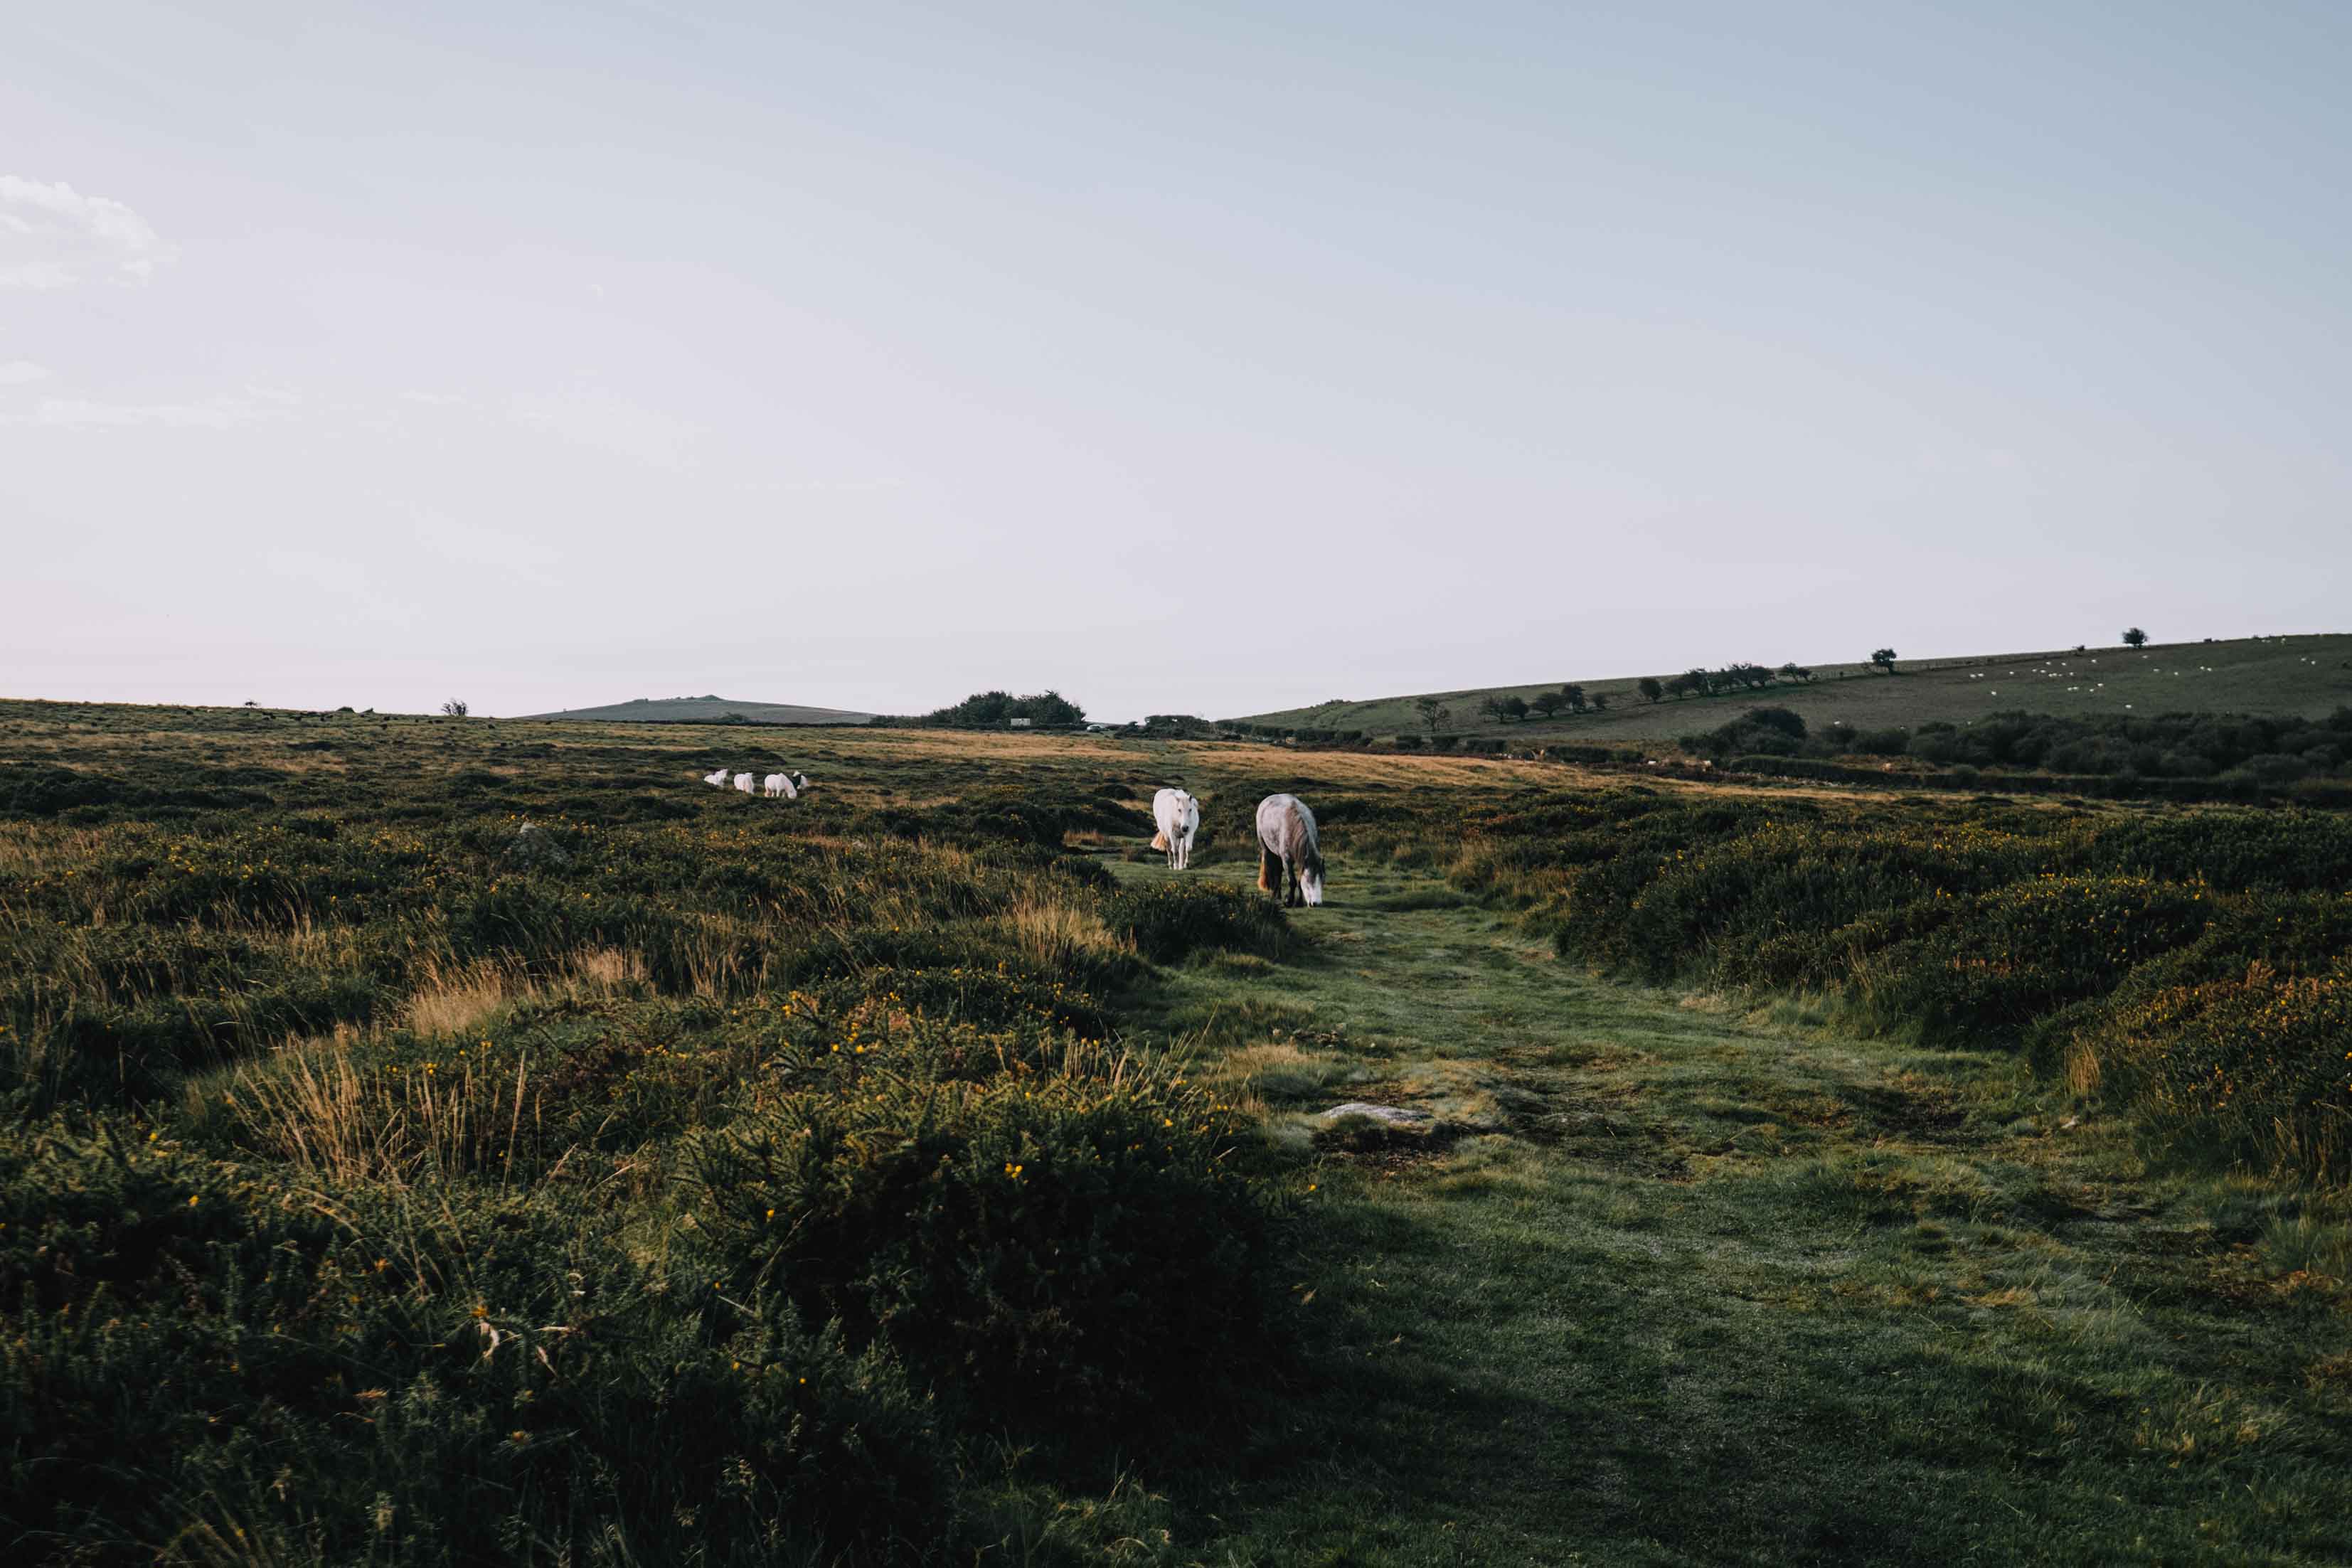 Ponies grazing the Dartmoor countryside